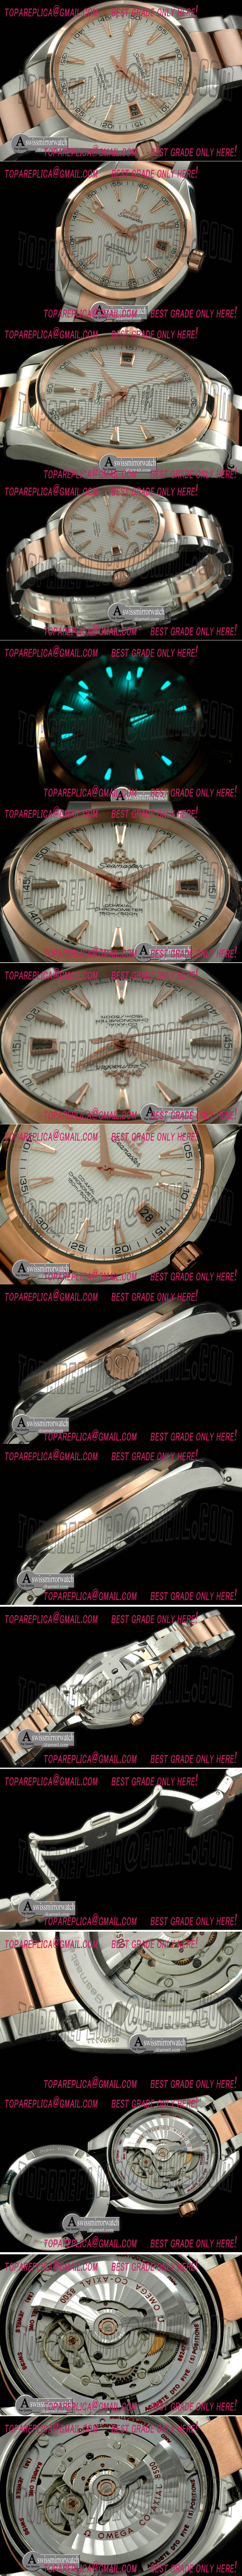 Replica Omega Speedmaster Watches